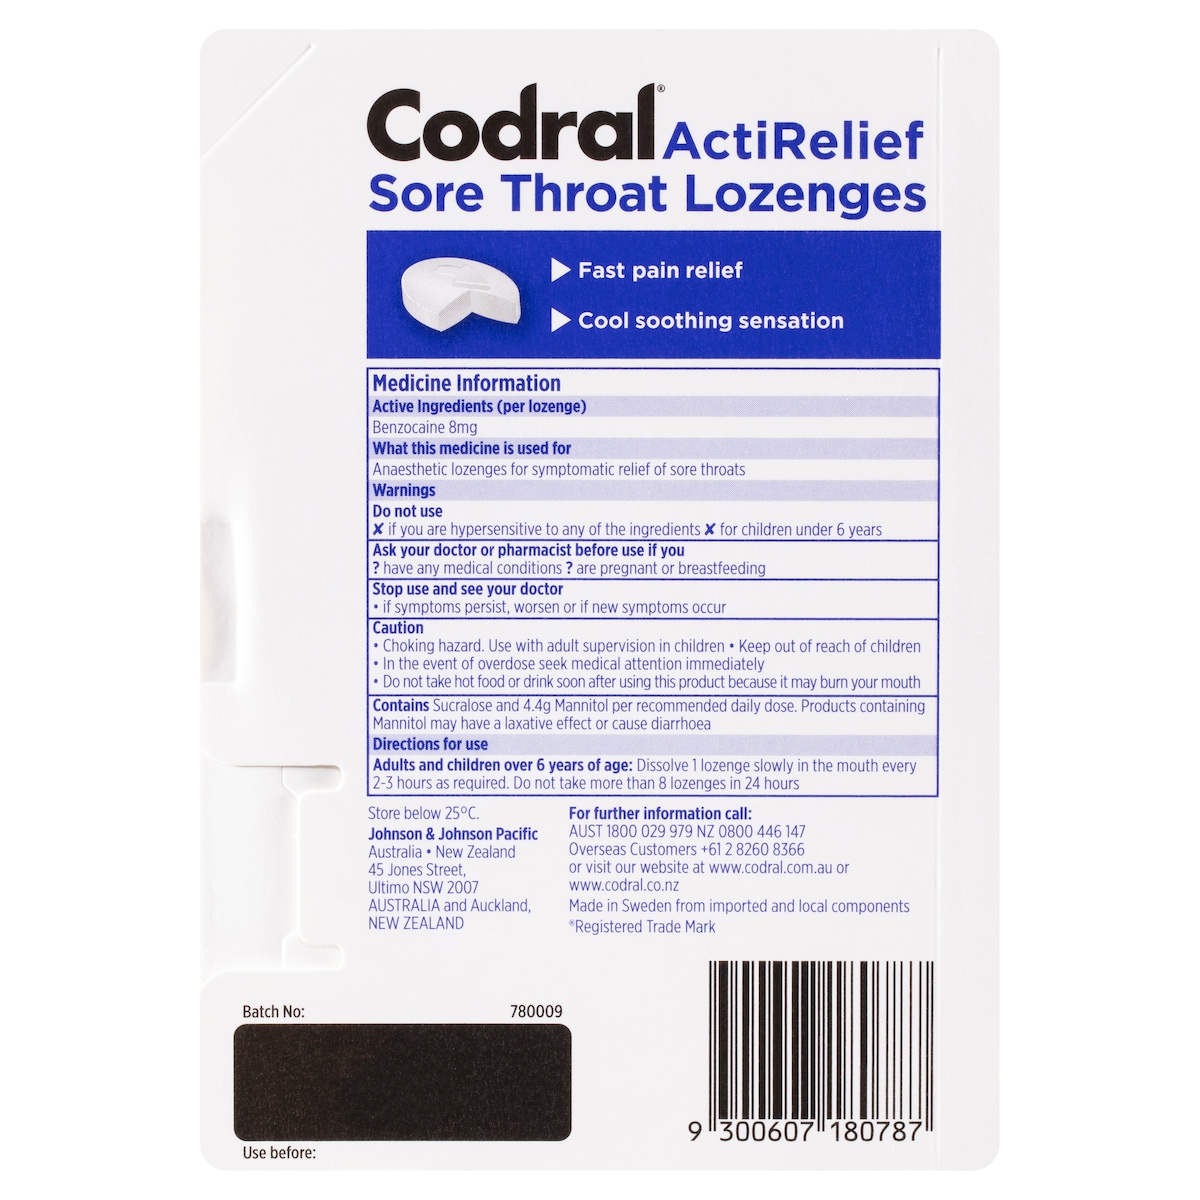 Codral Actirelief Sore Throat Lozenges Anaesthetic Coolmint 20 Pack